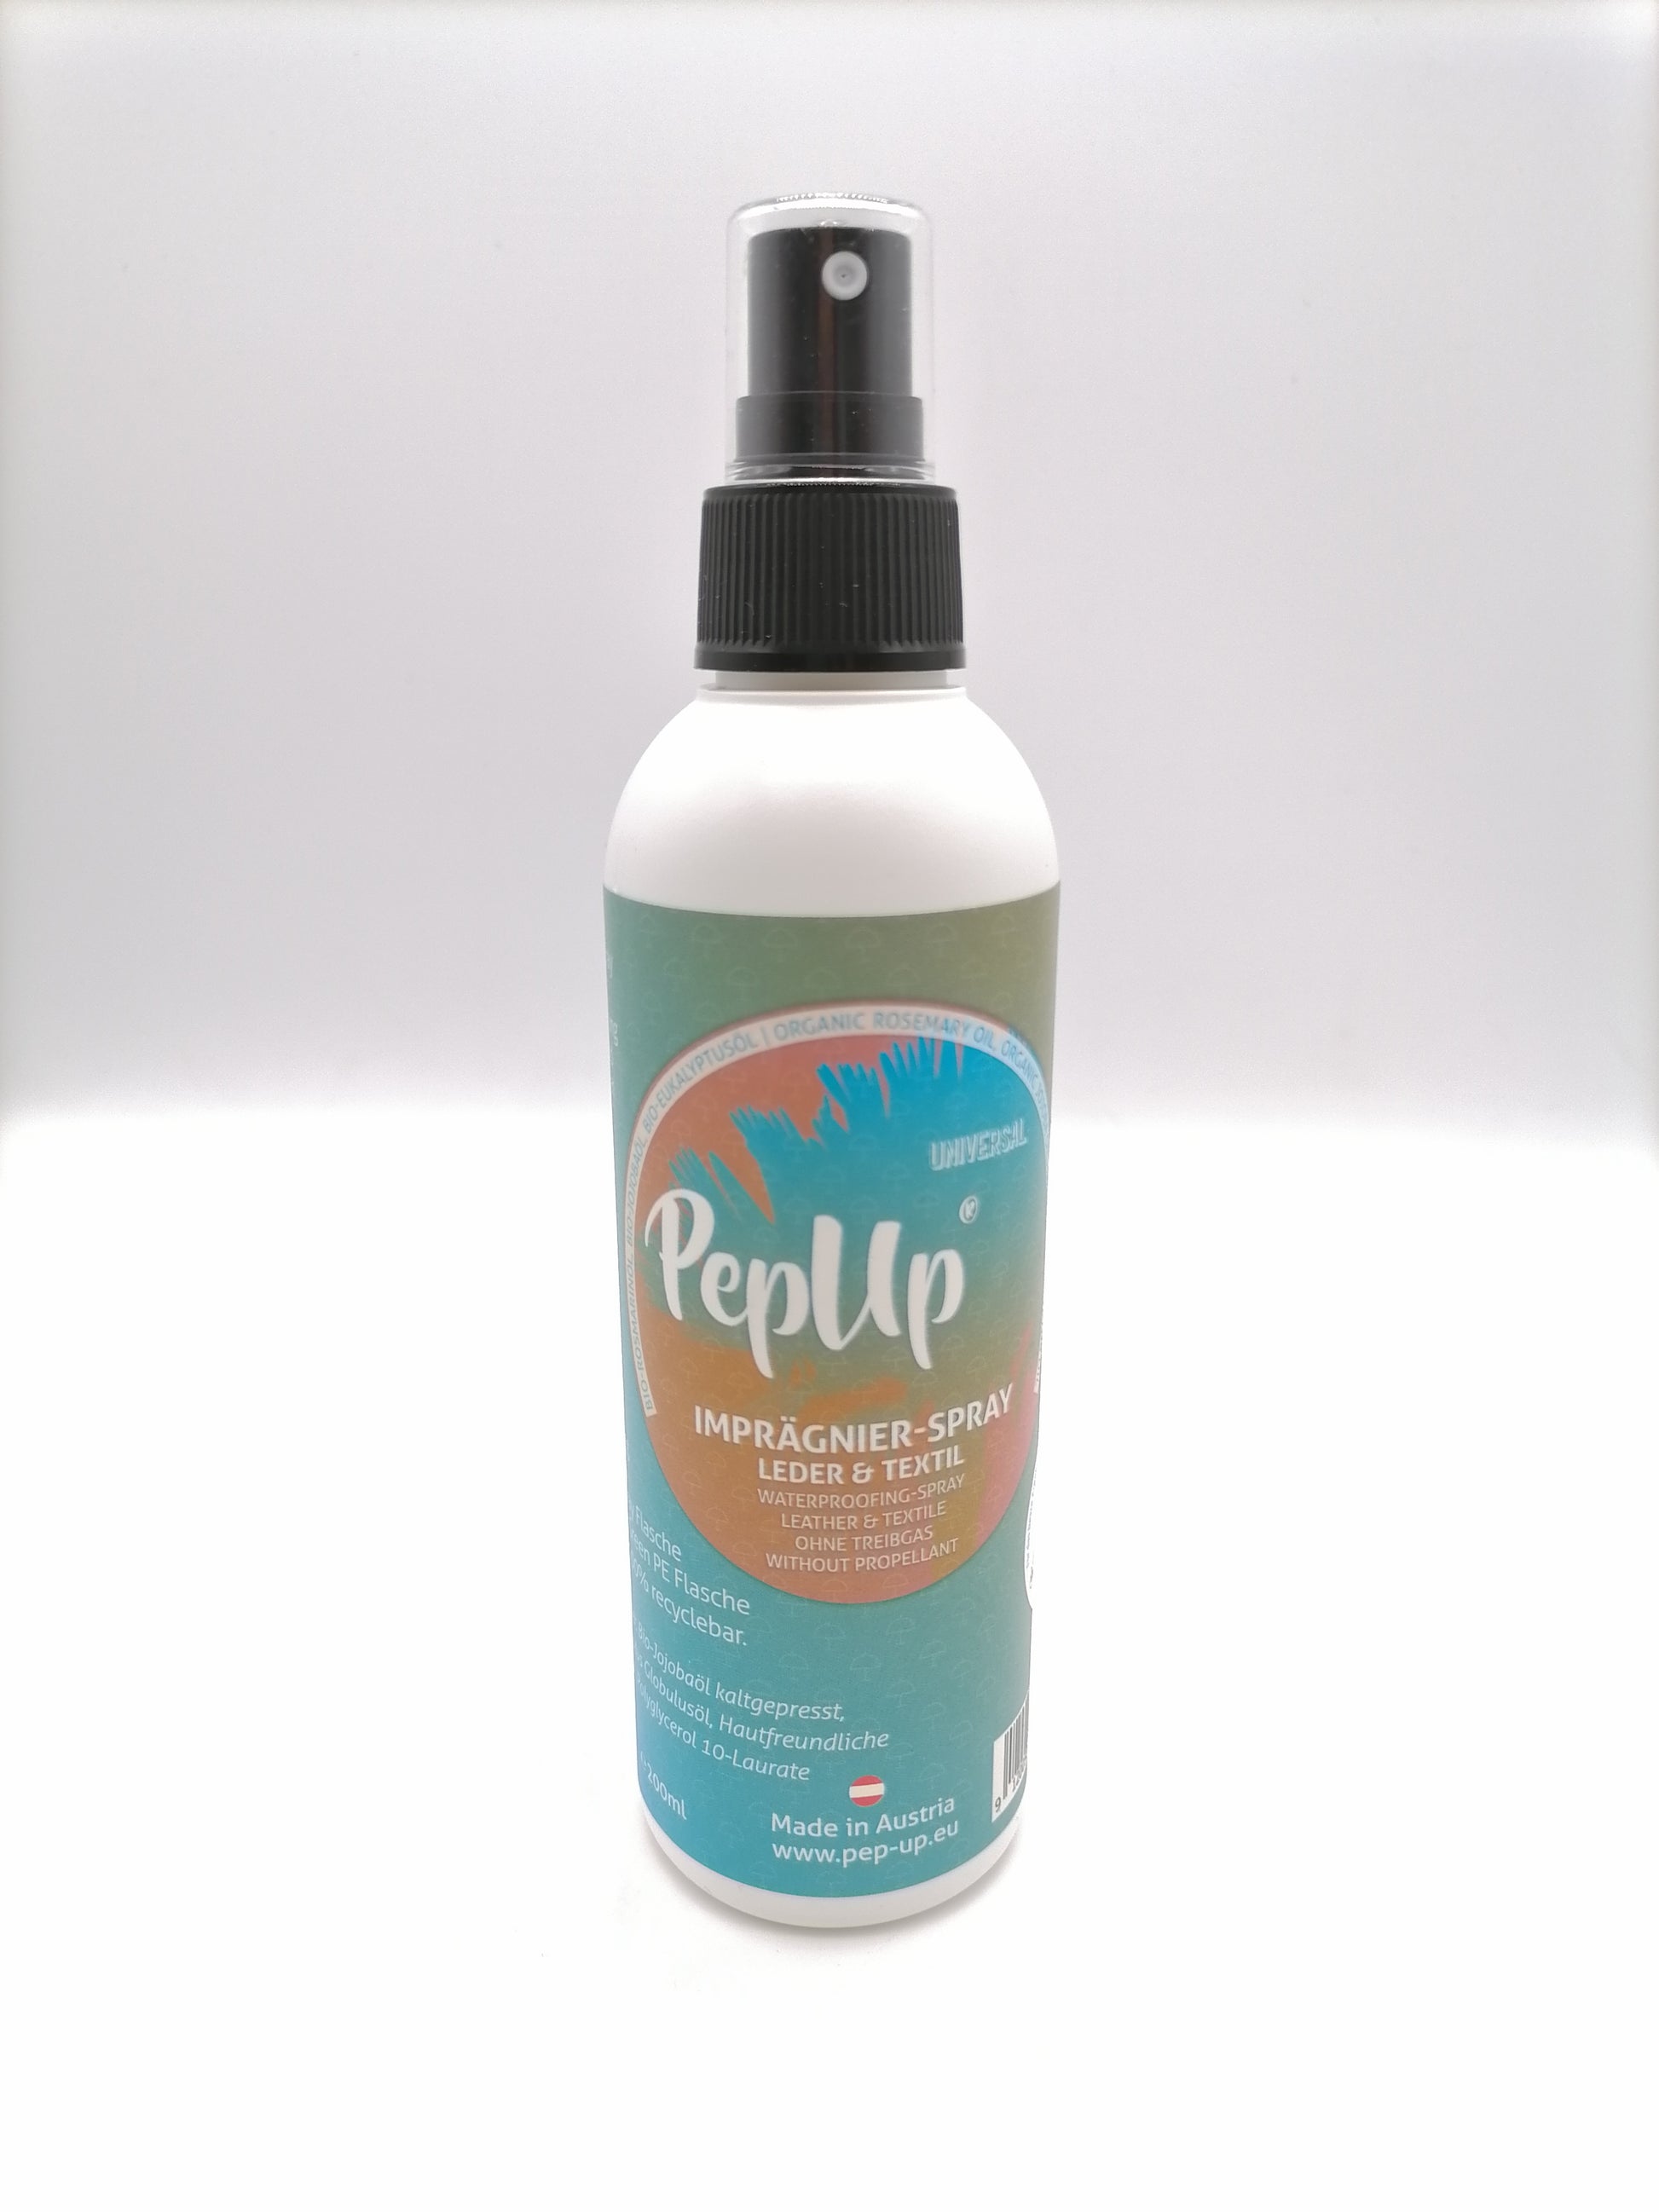 PepUp Imprägnier-Spray Leder & Textilien PepUp